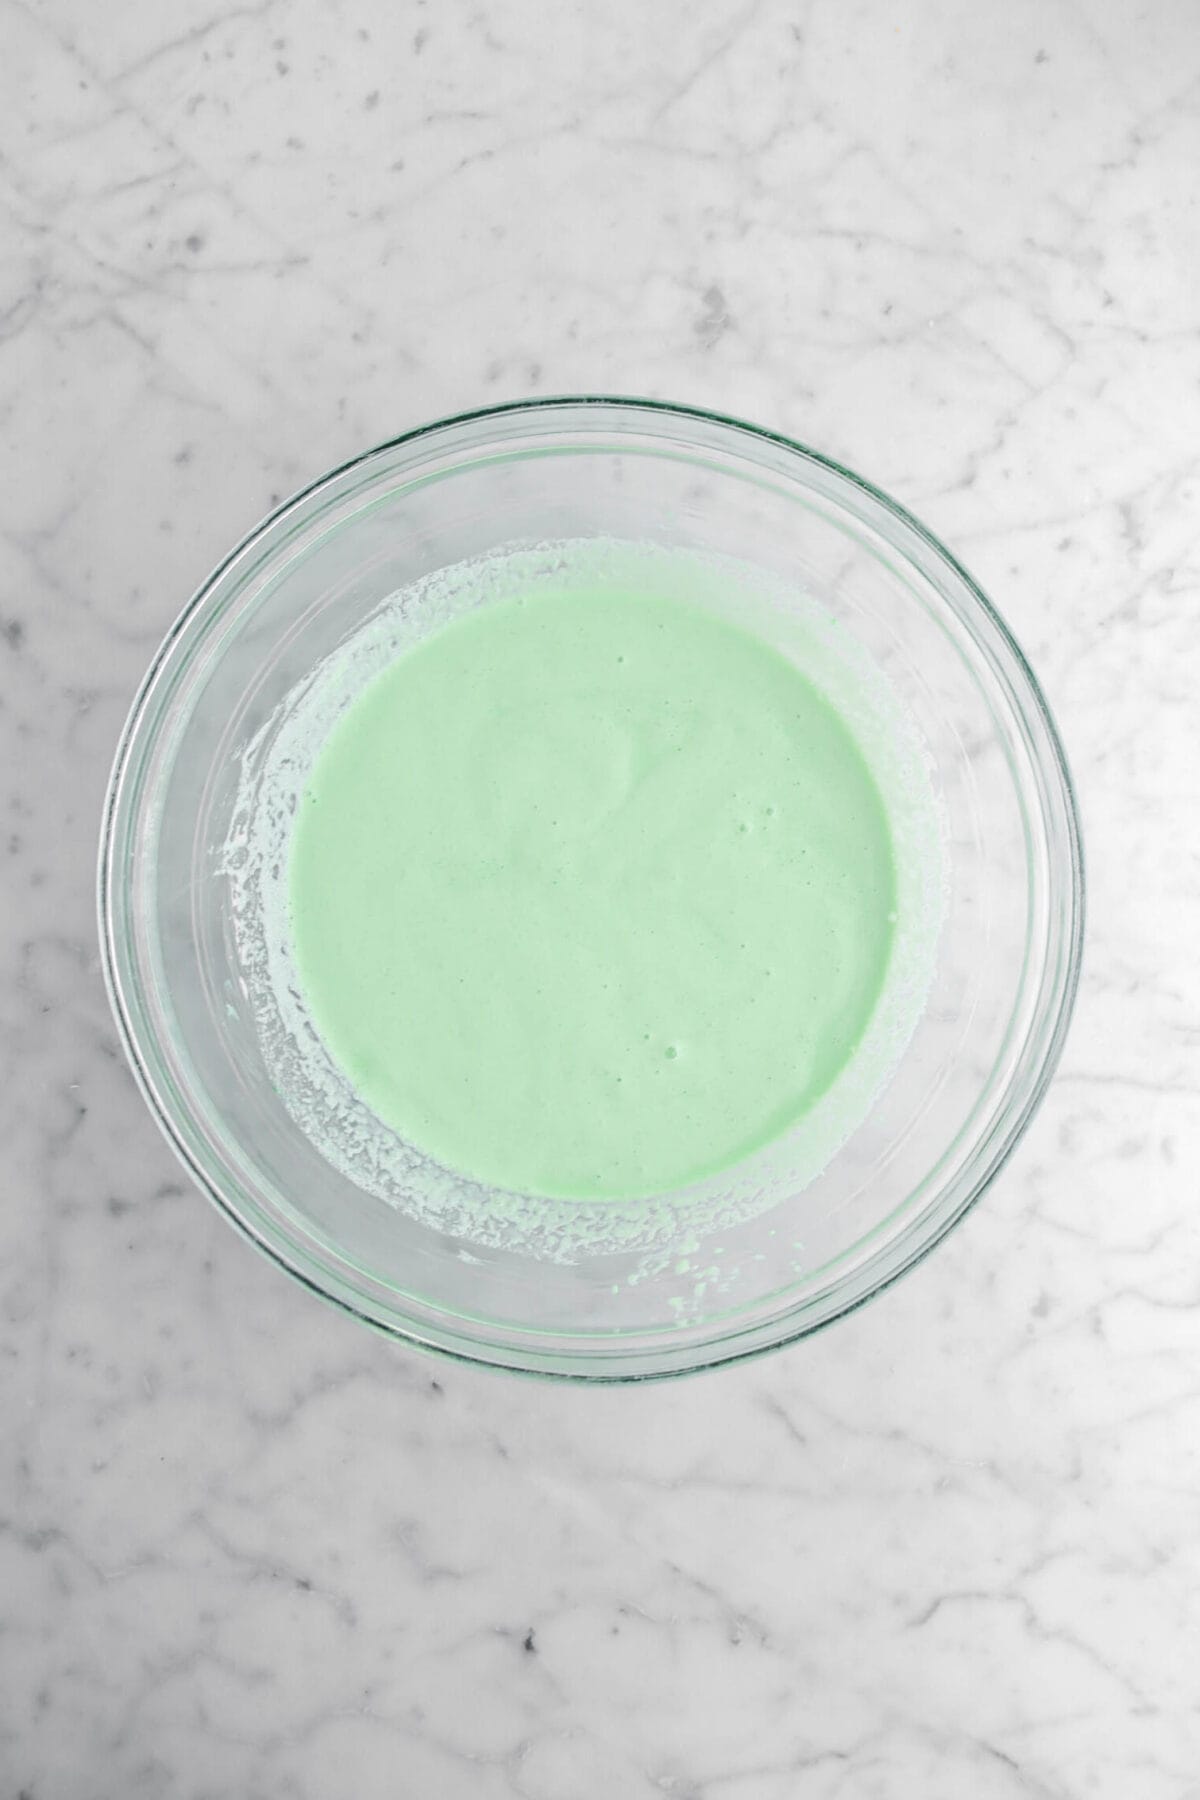 green milk mixture in glass bowl.